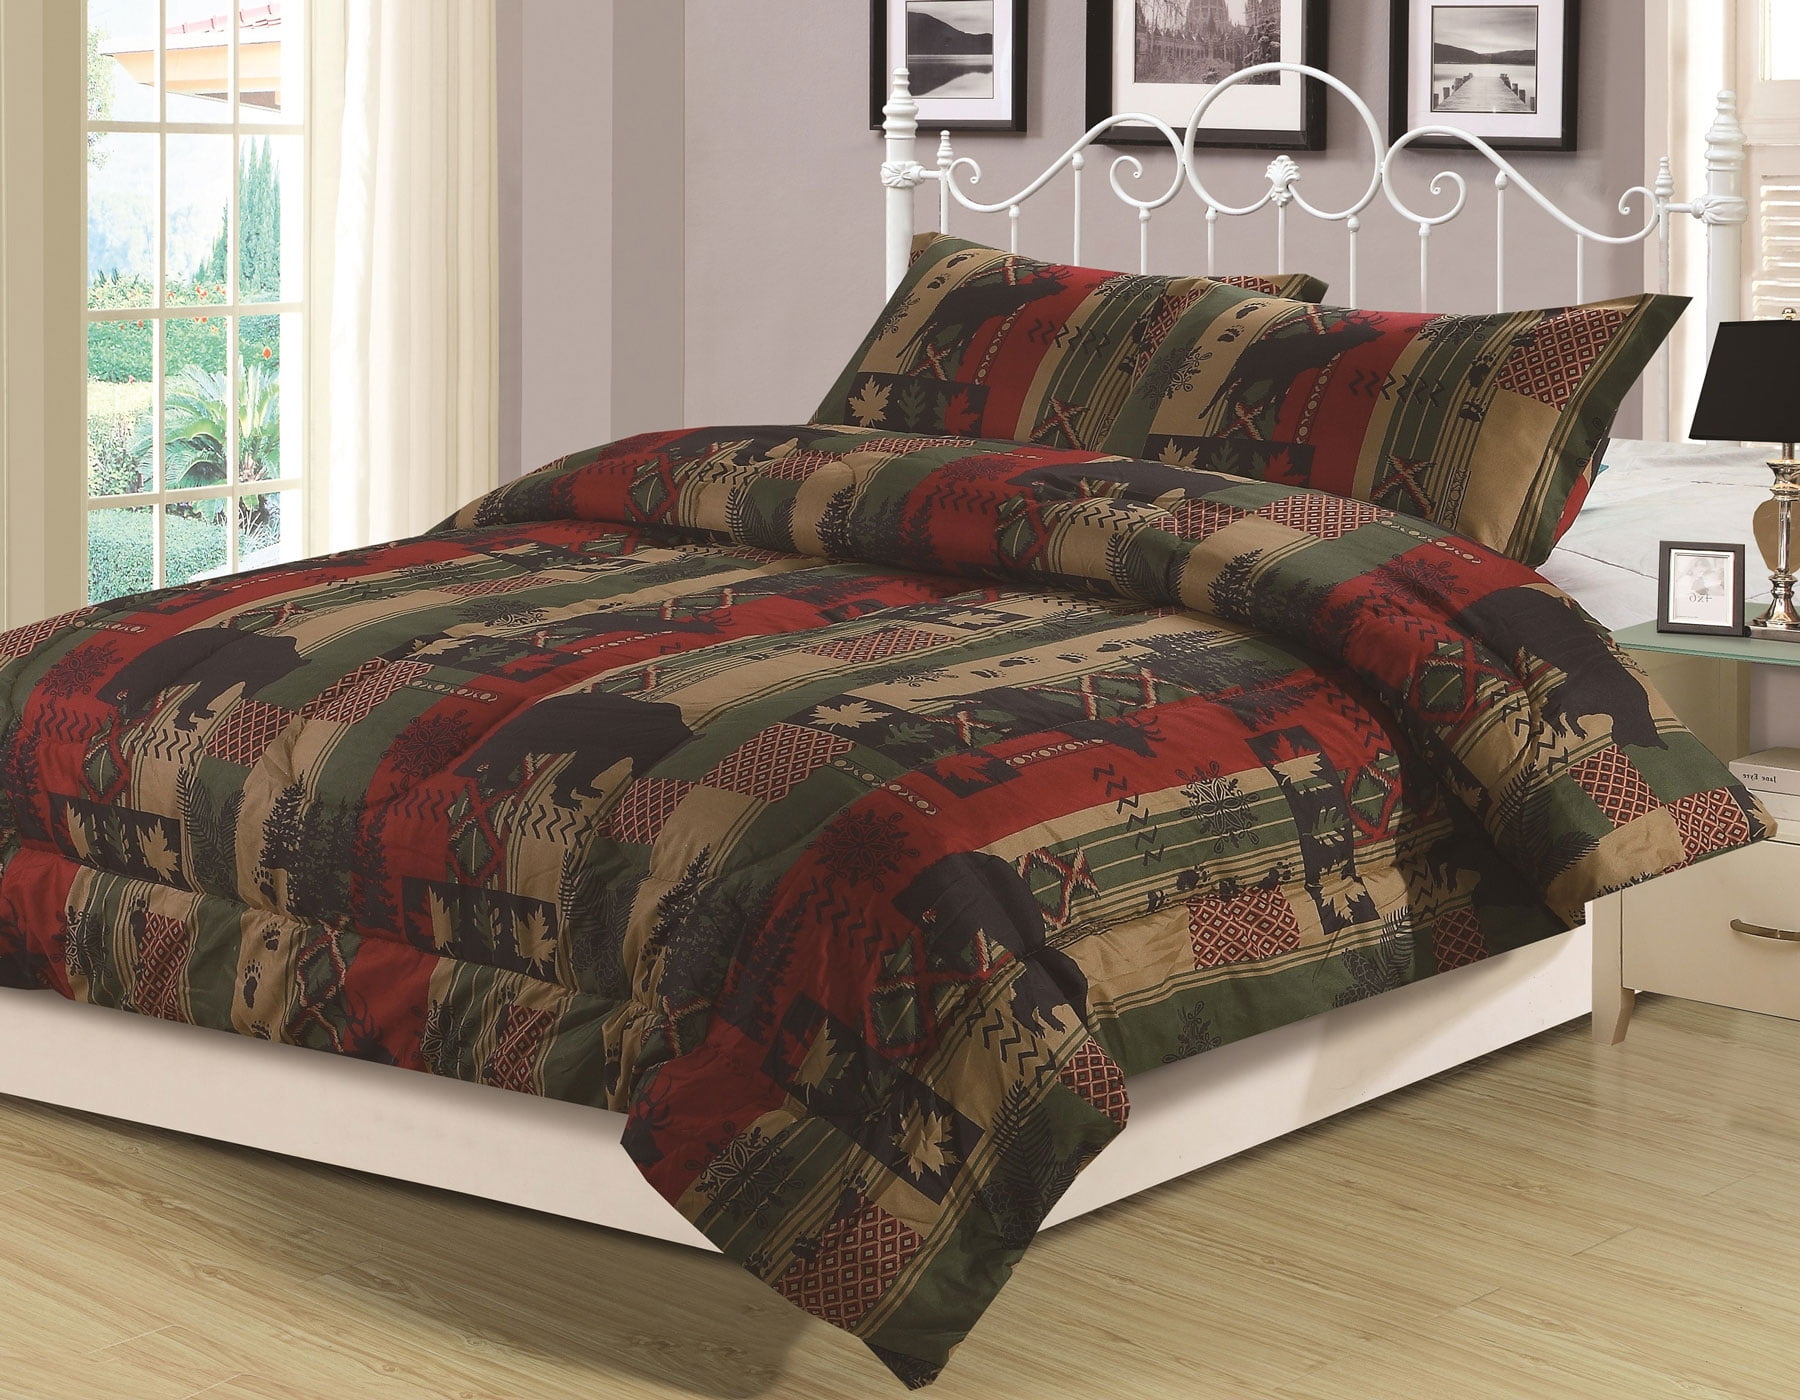 Rustic Southwest Twin Comforter 2 Piece, Twin Xl Lodge Bedding